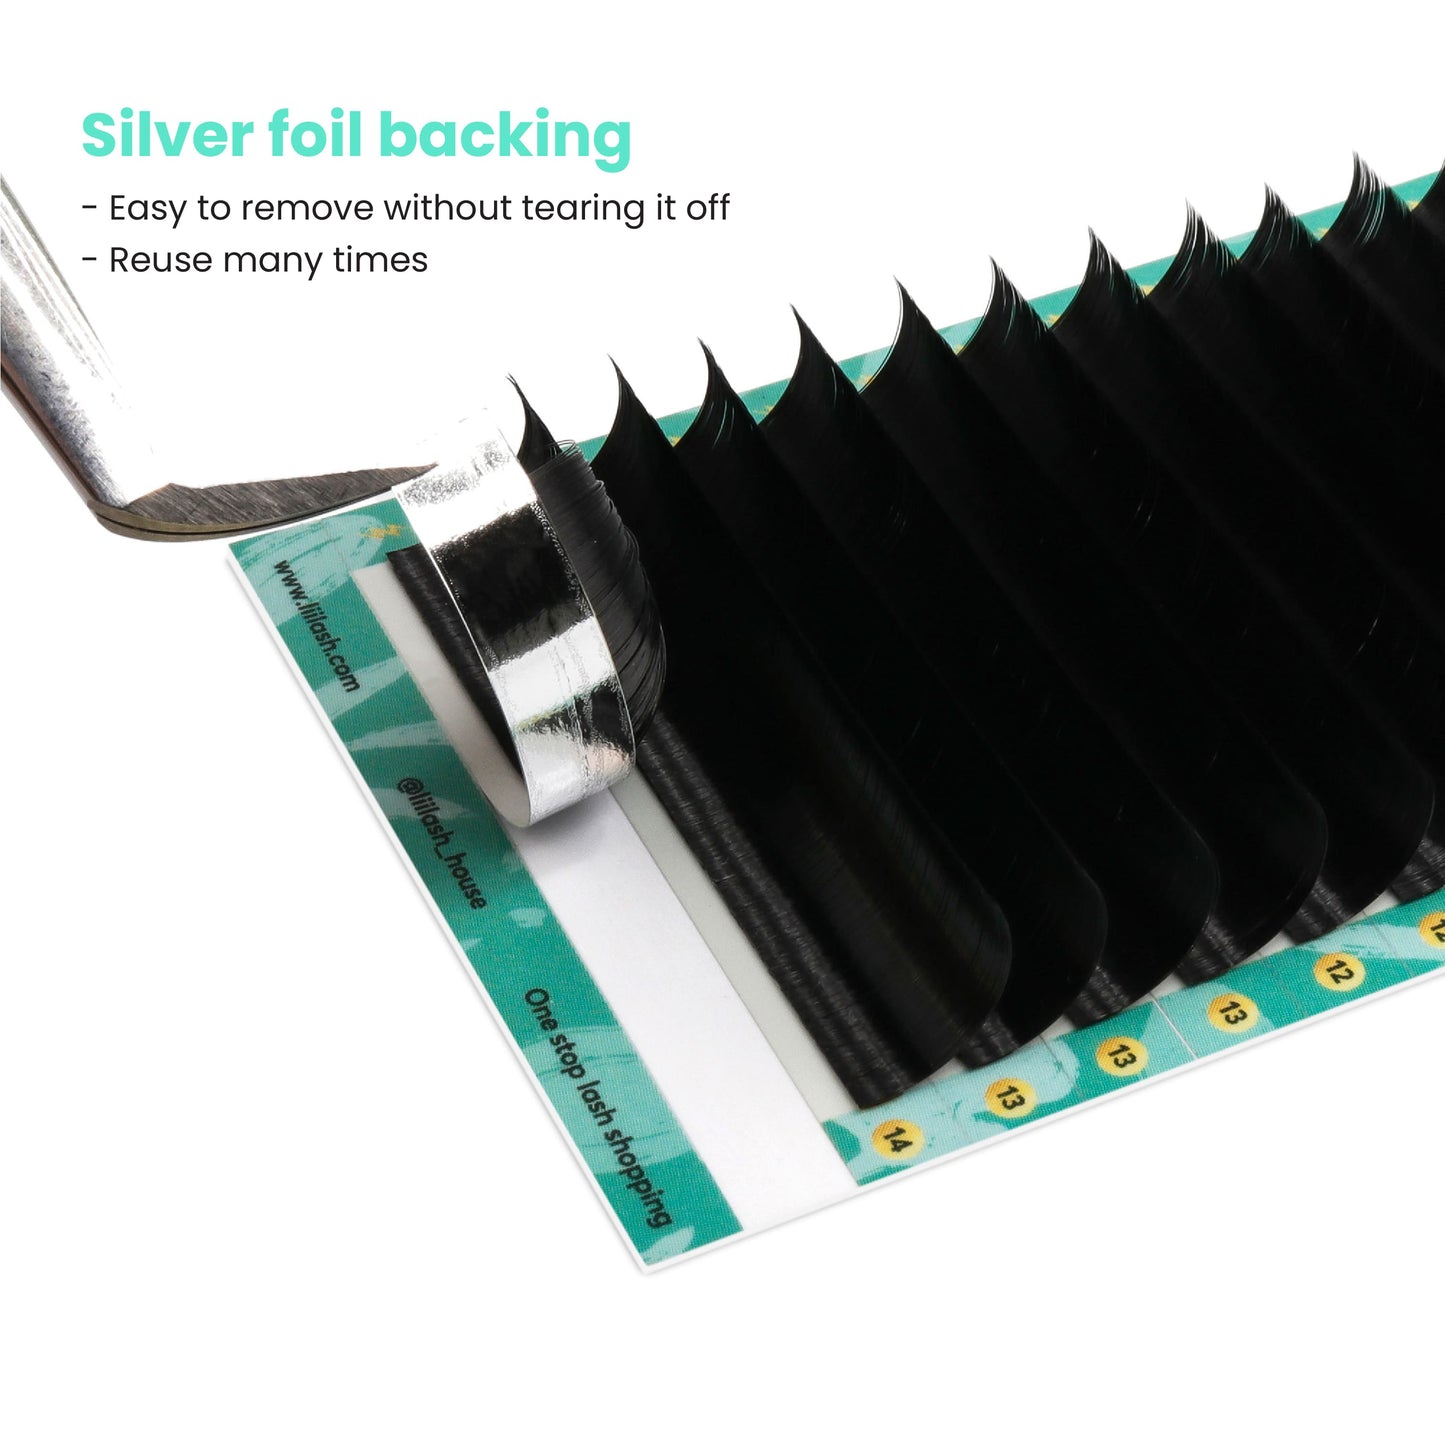 Premium-mink-volume-lashes-0.07mm-Silver-foil-backing